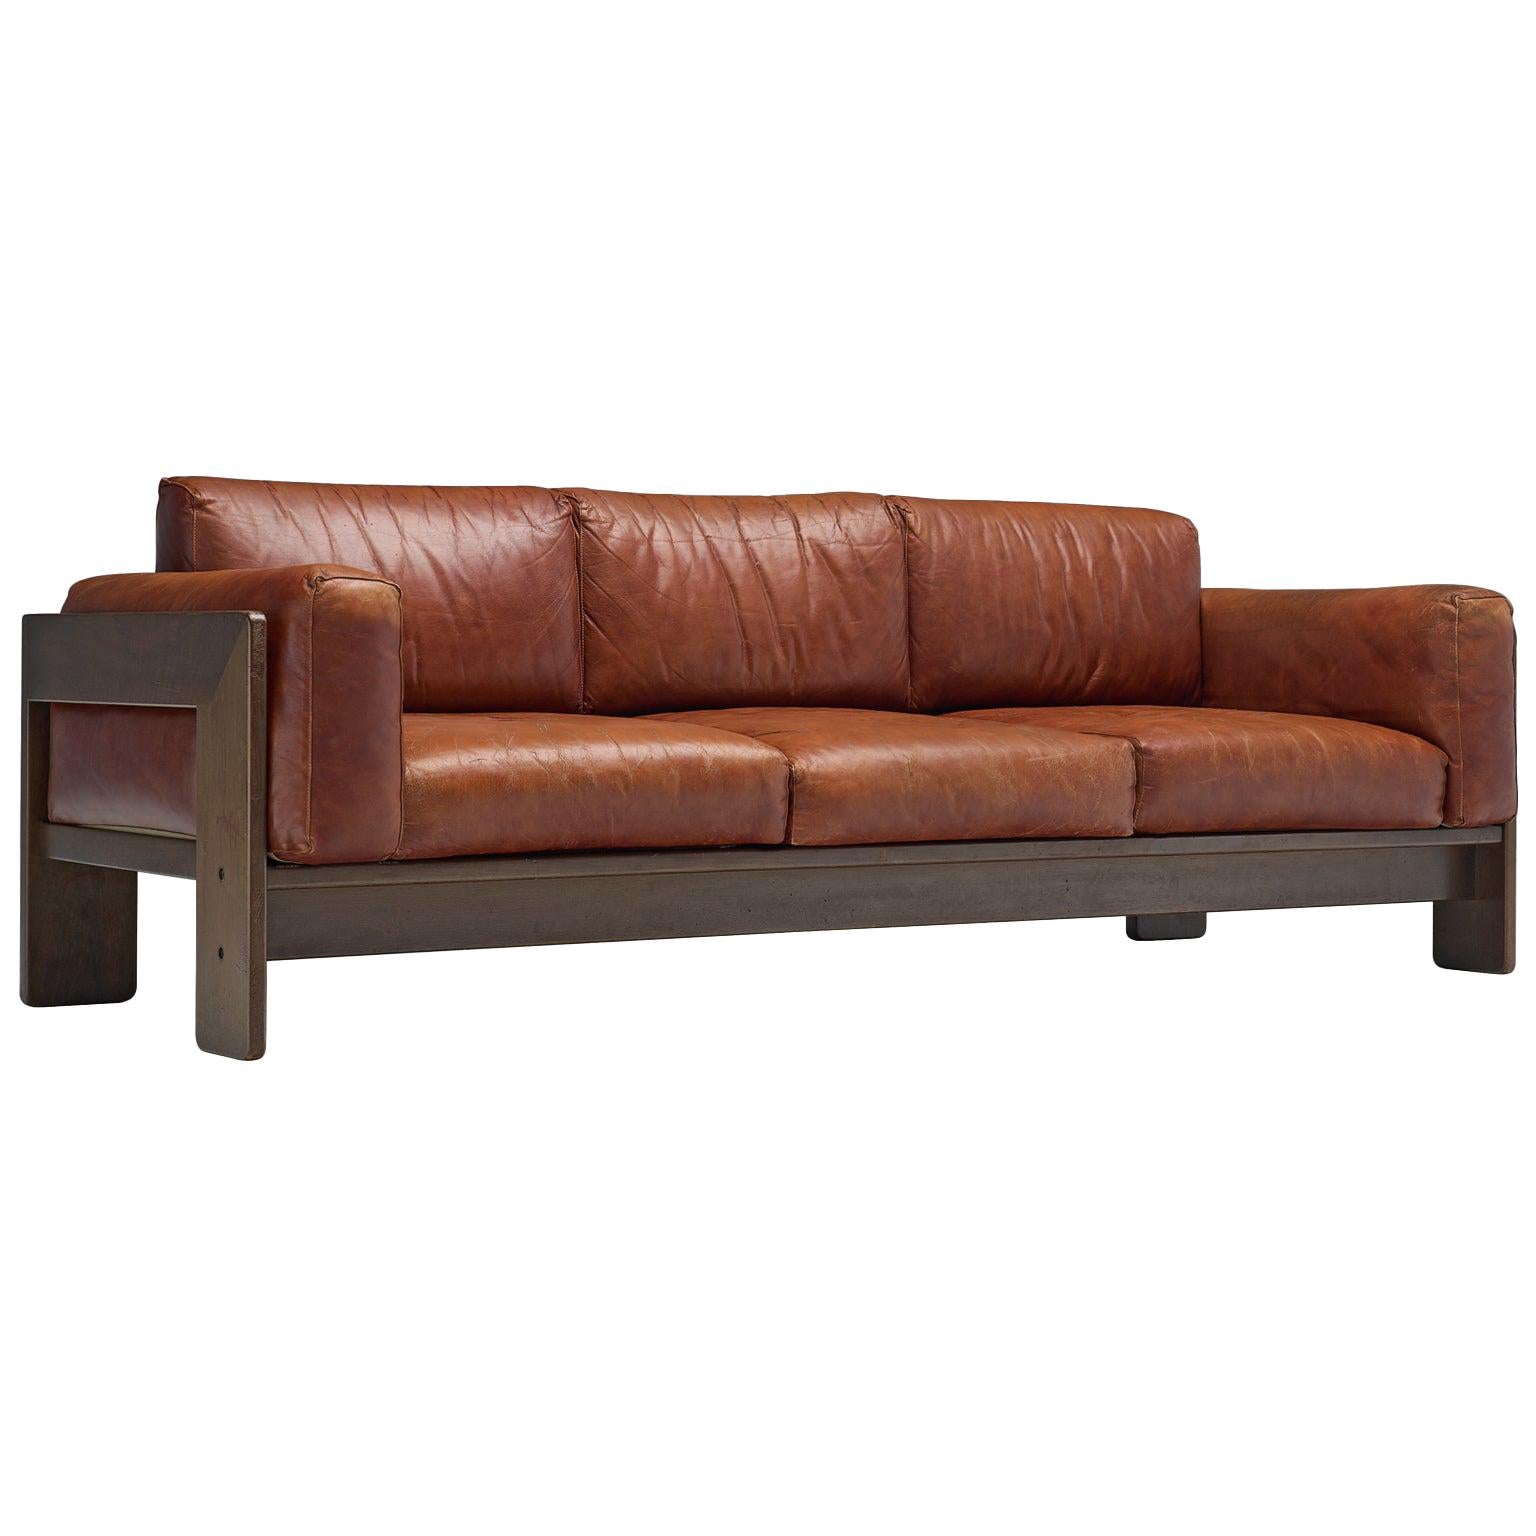 Tobia Scarpa 'Bastiano' Sofa in Walnut and Cognac Leather